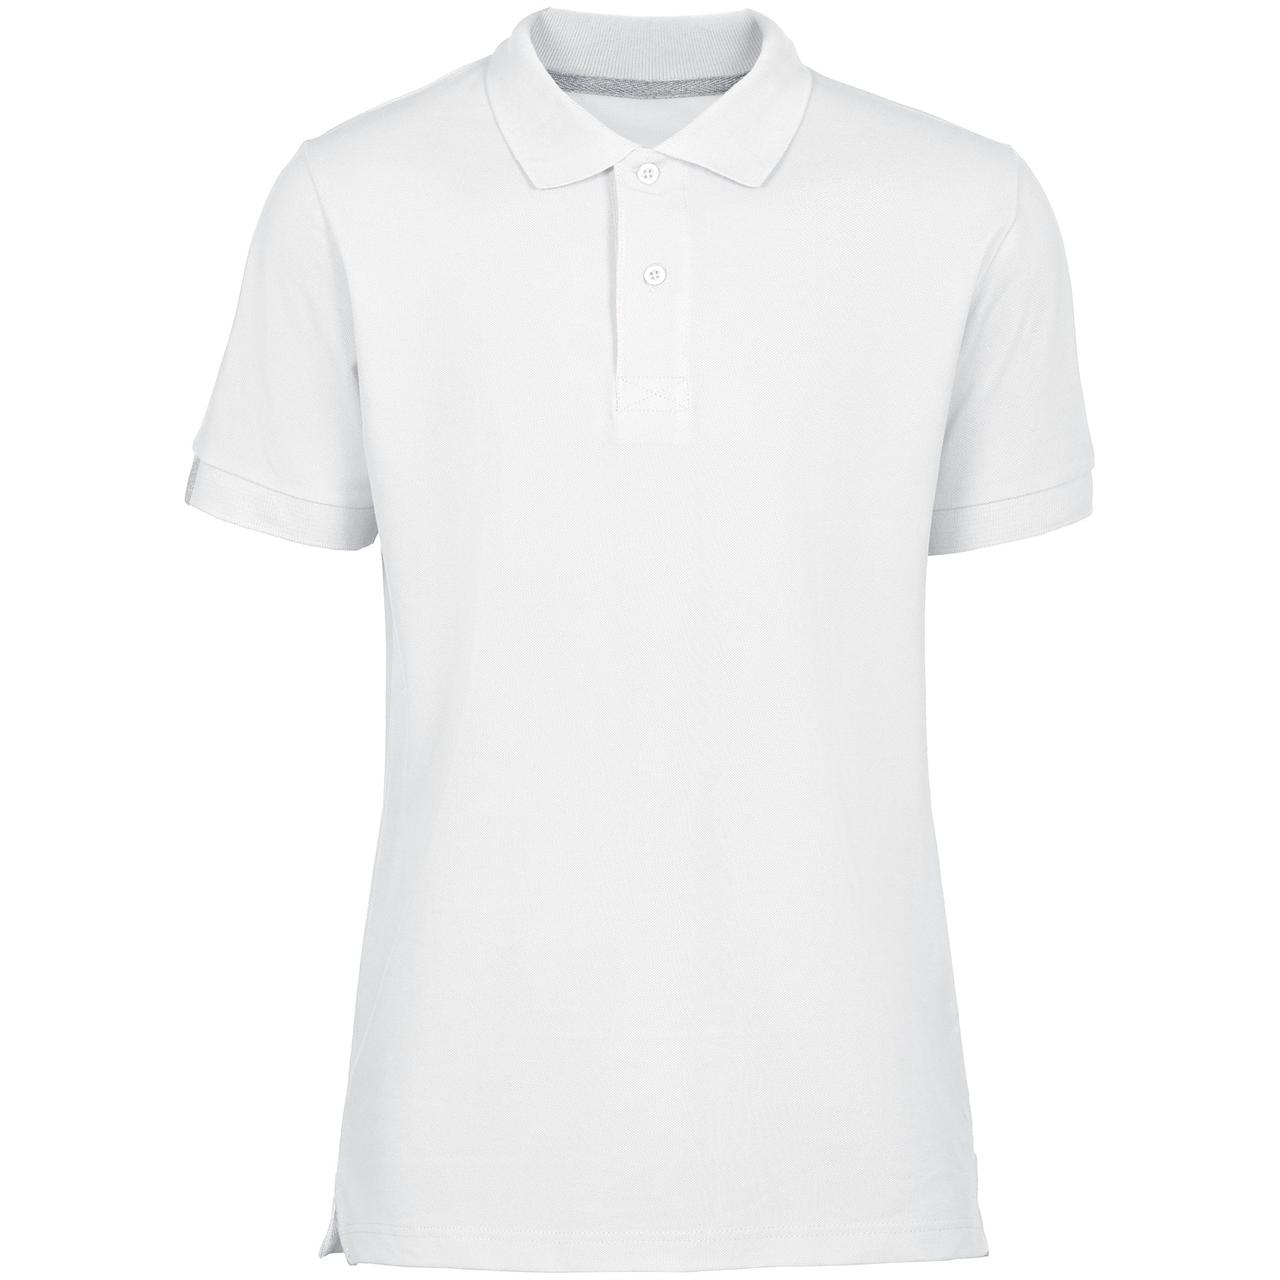 Рубашка поло мужская Virma Premium, белая (артикул 11145.60)